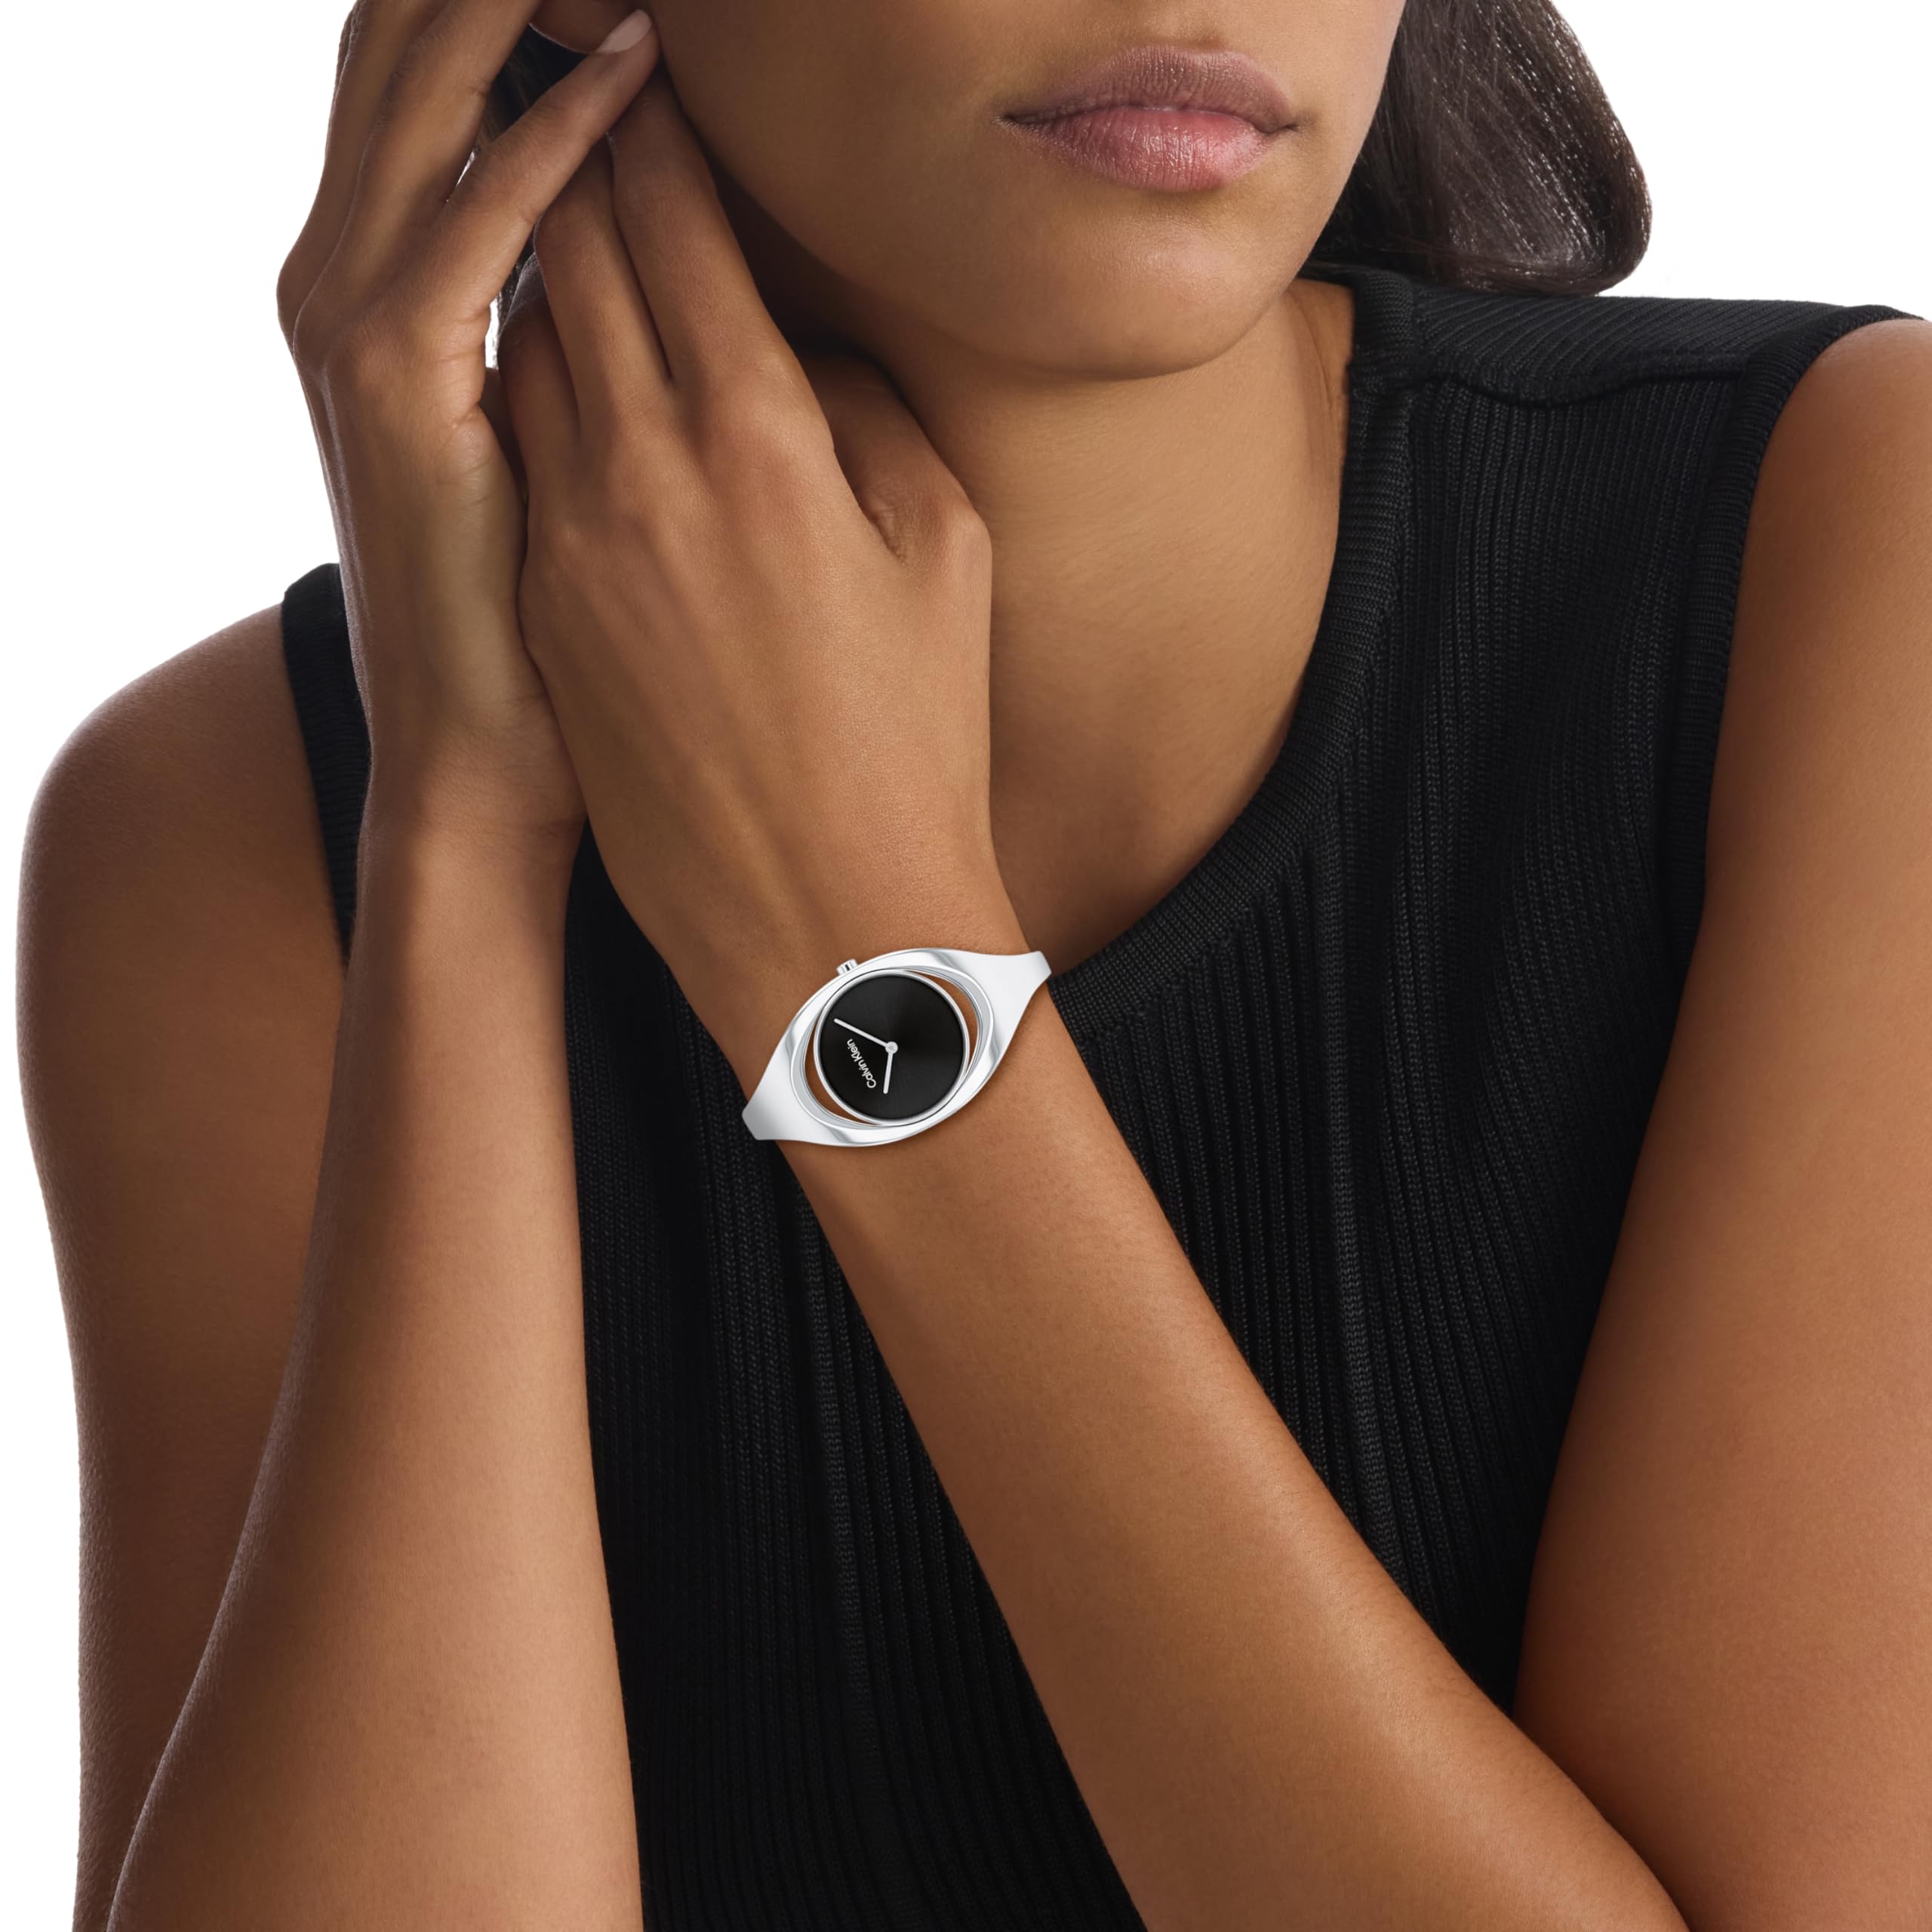 Calvin Klein Women's CK Elation Wristwatch, 2 Hand, Stainless Steel, Minimalistic Bangle Style, (Model:25200392)